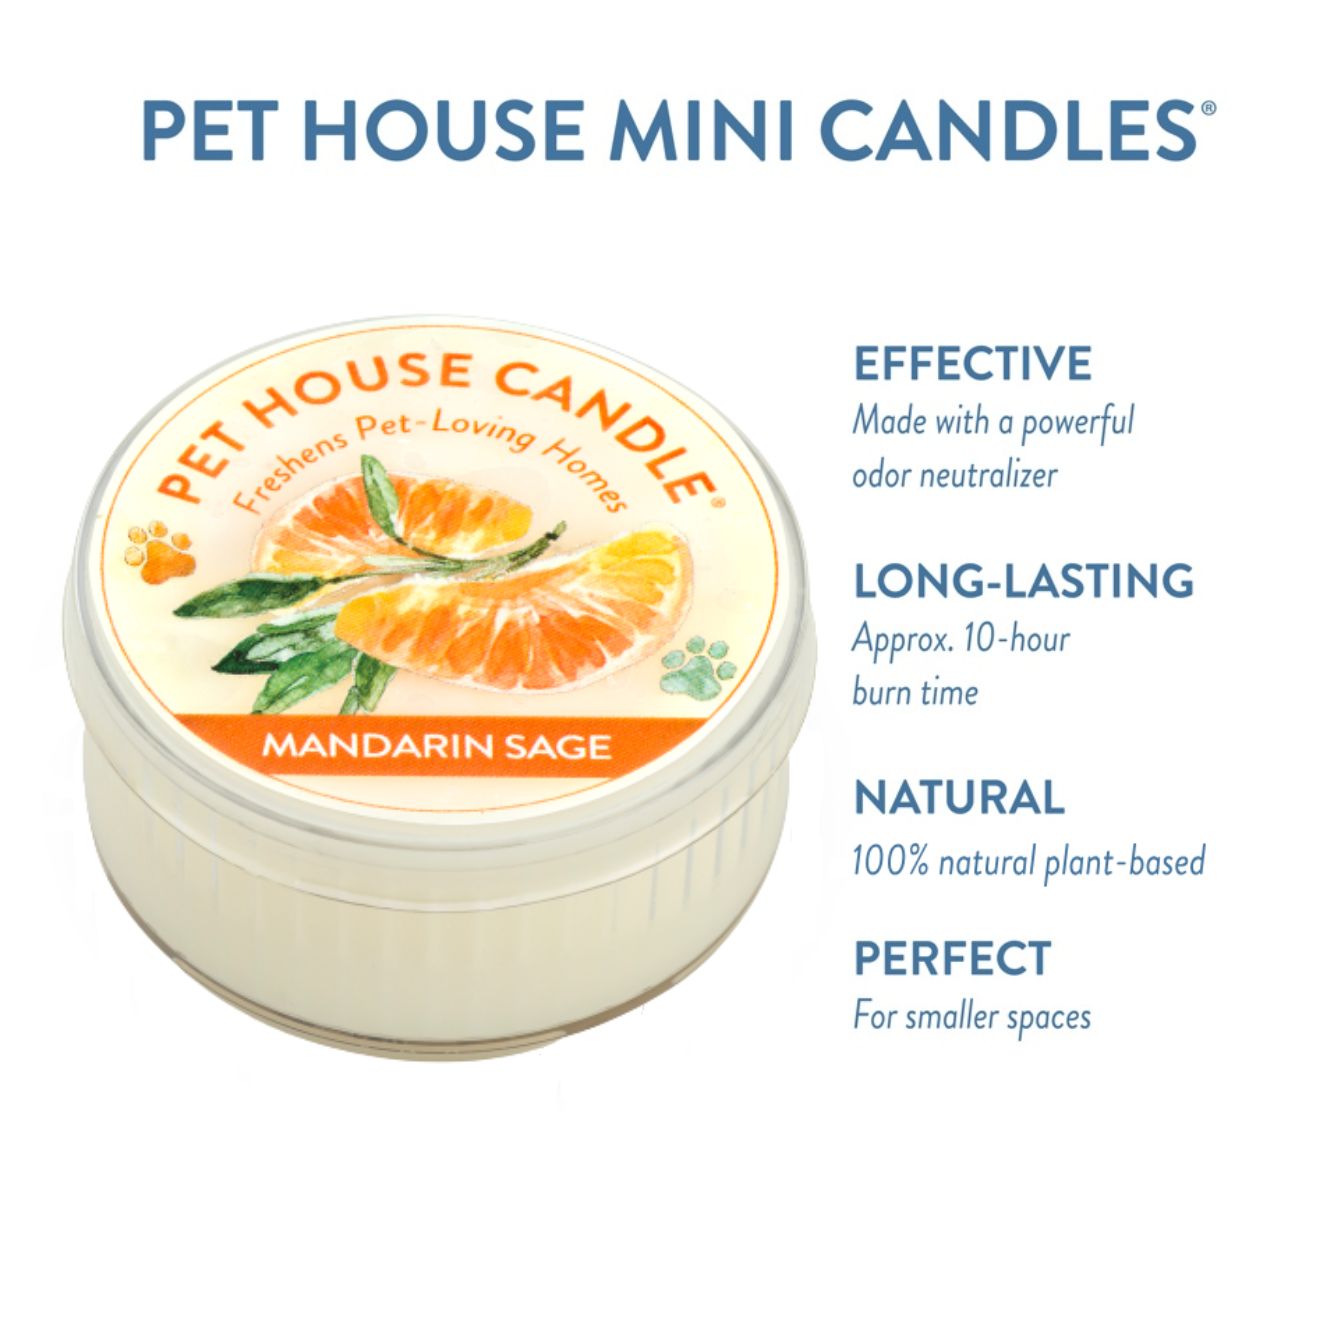 Mandarin Sage Mini Candle infographics